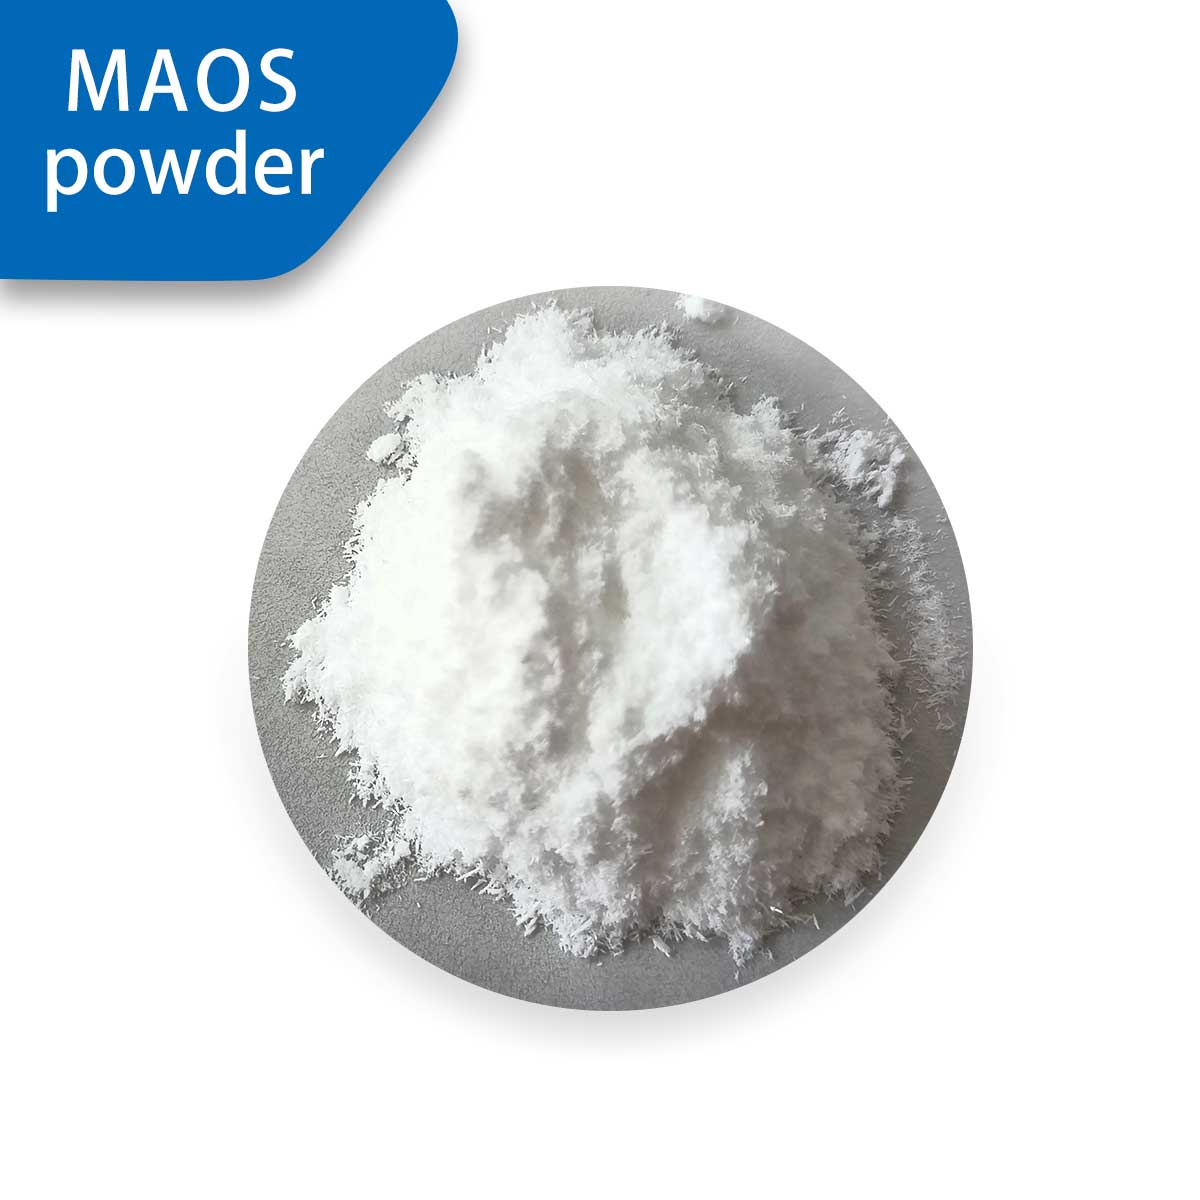 MAOS powder